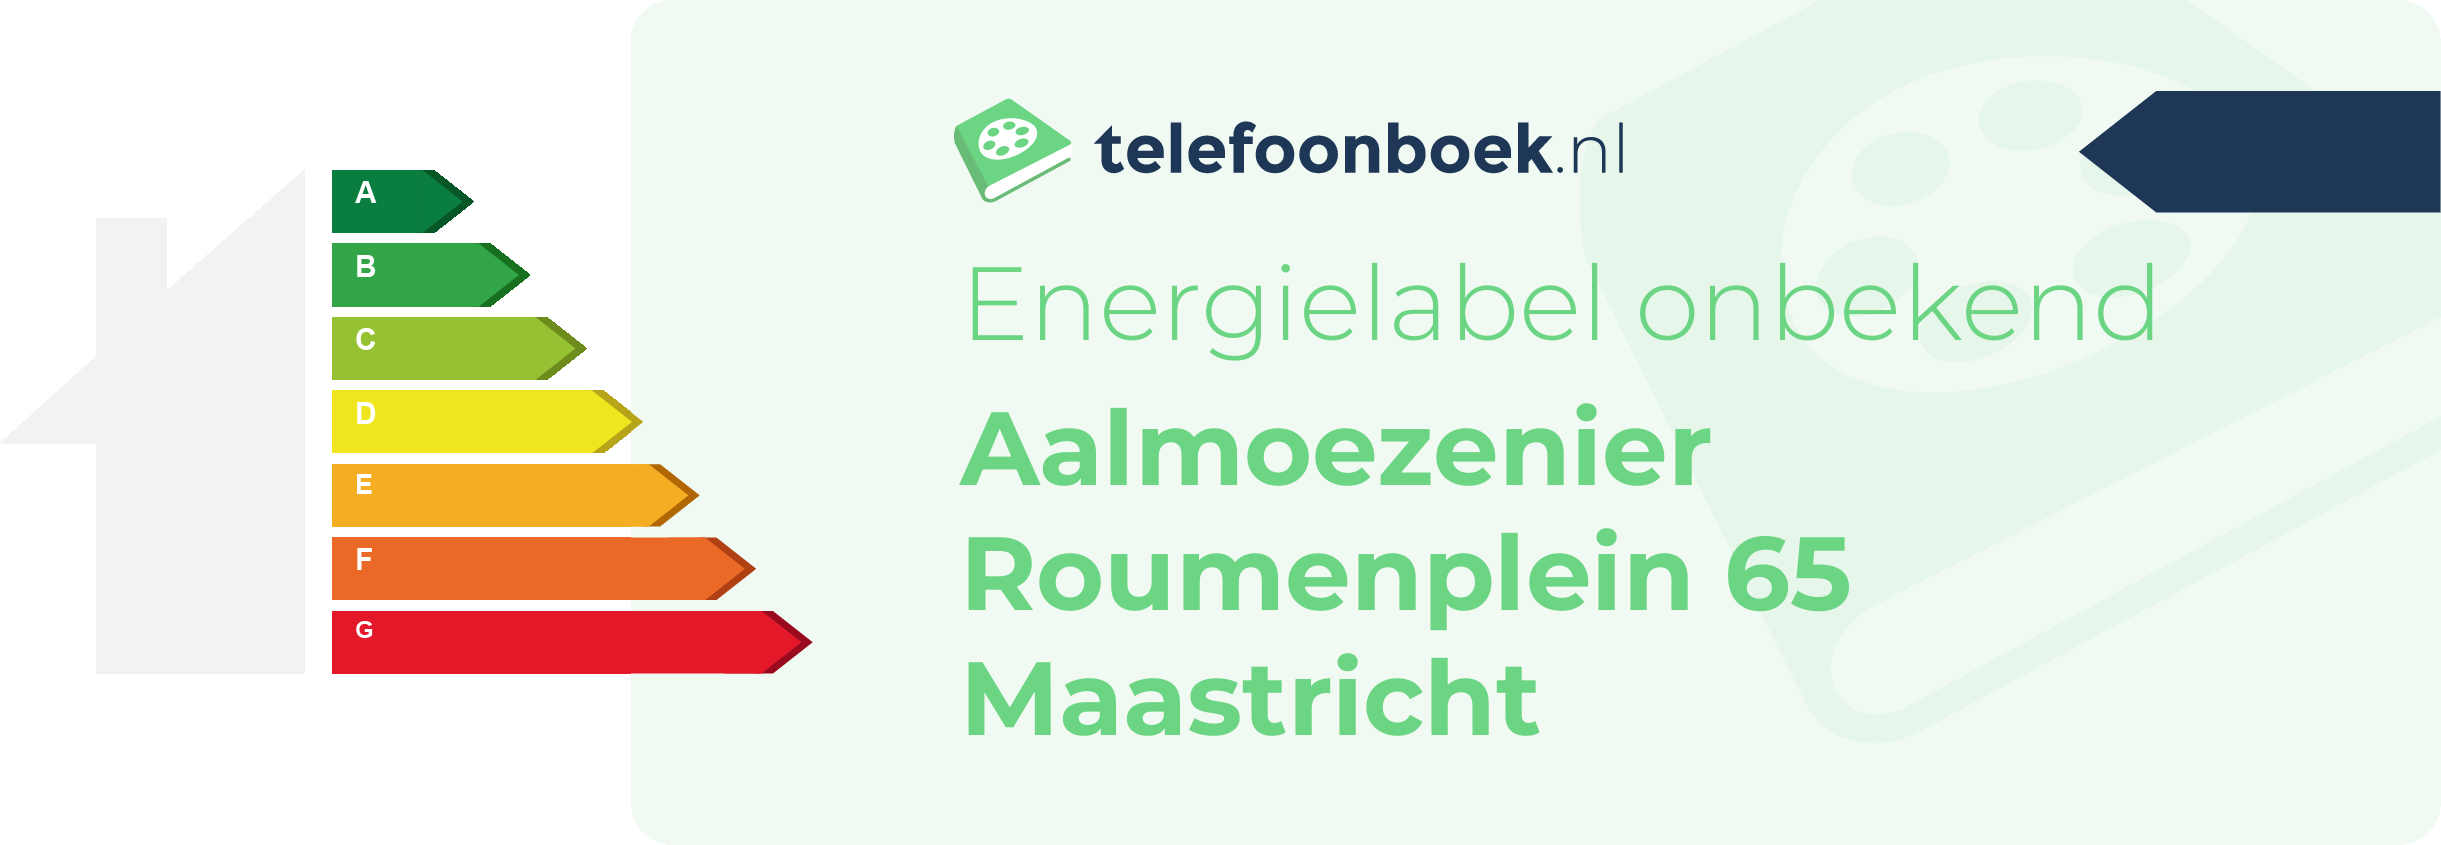 Energielabel Aalmoezenier Roumenplein 65 Maastricht